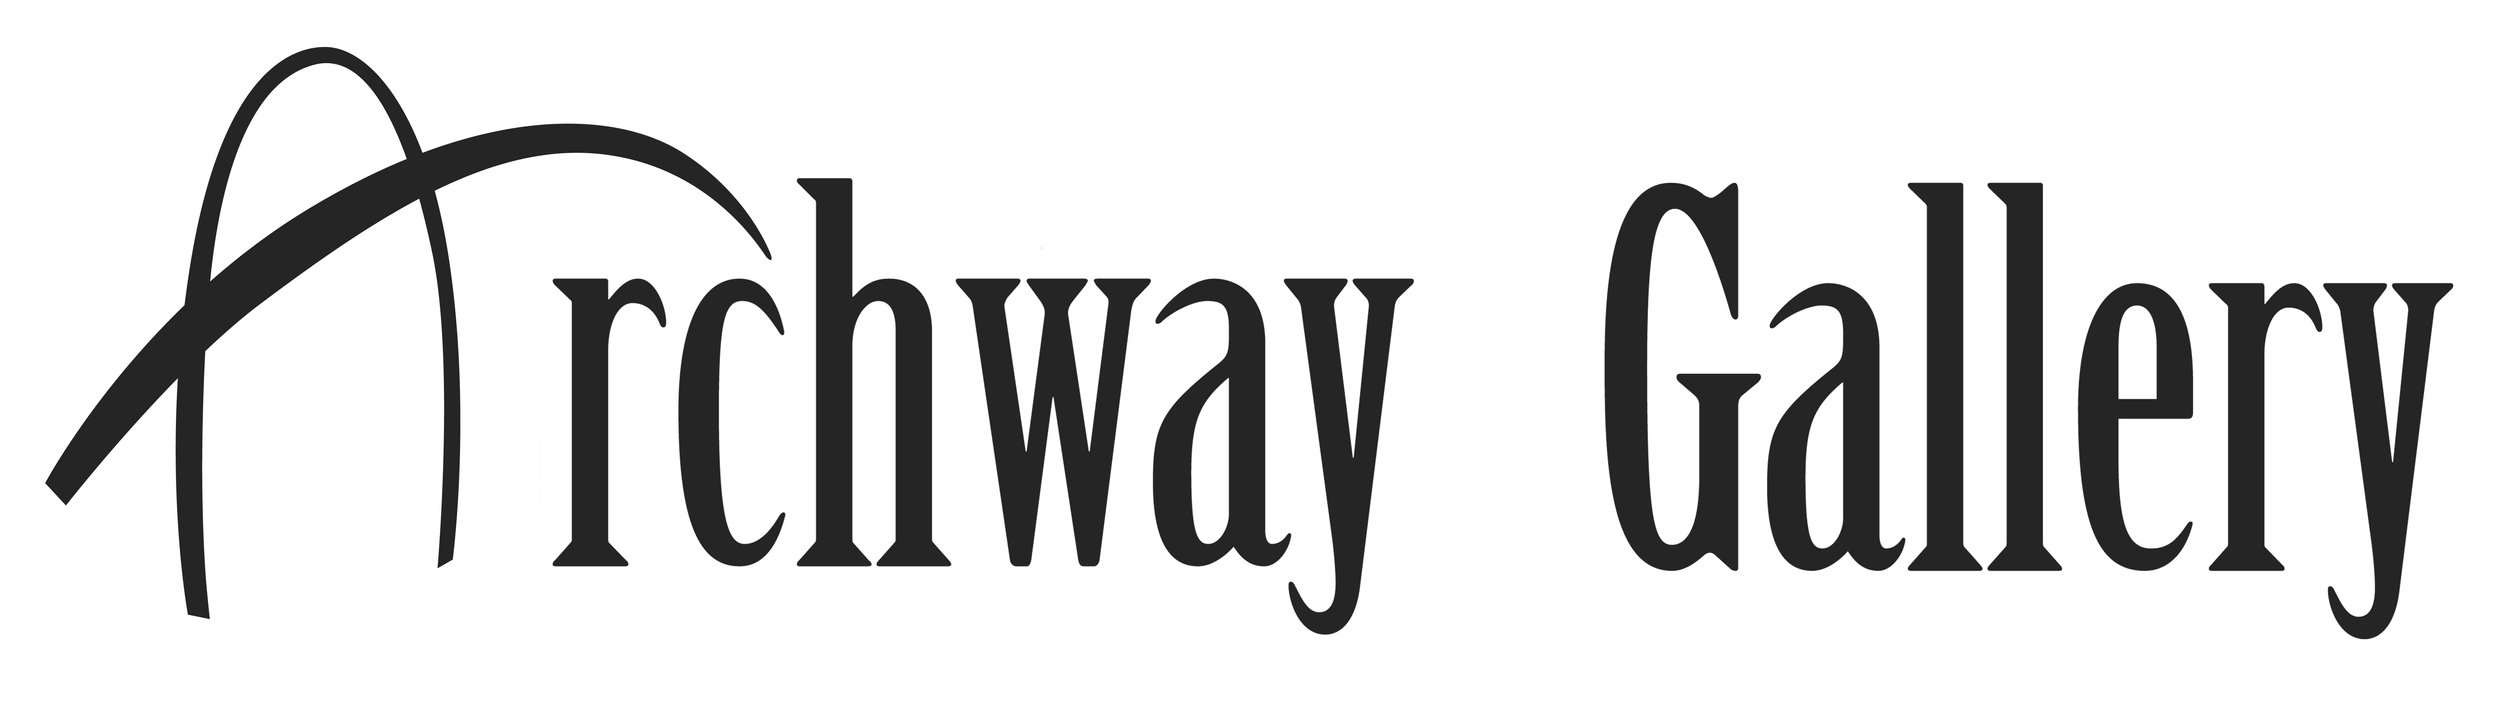 archway_gallery_logo_widelarge.jpg